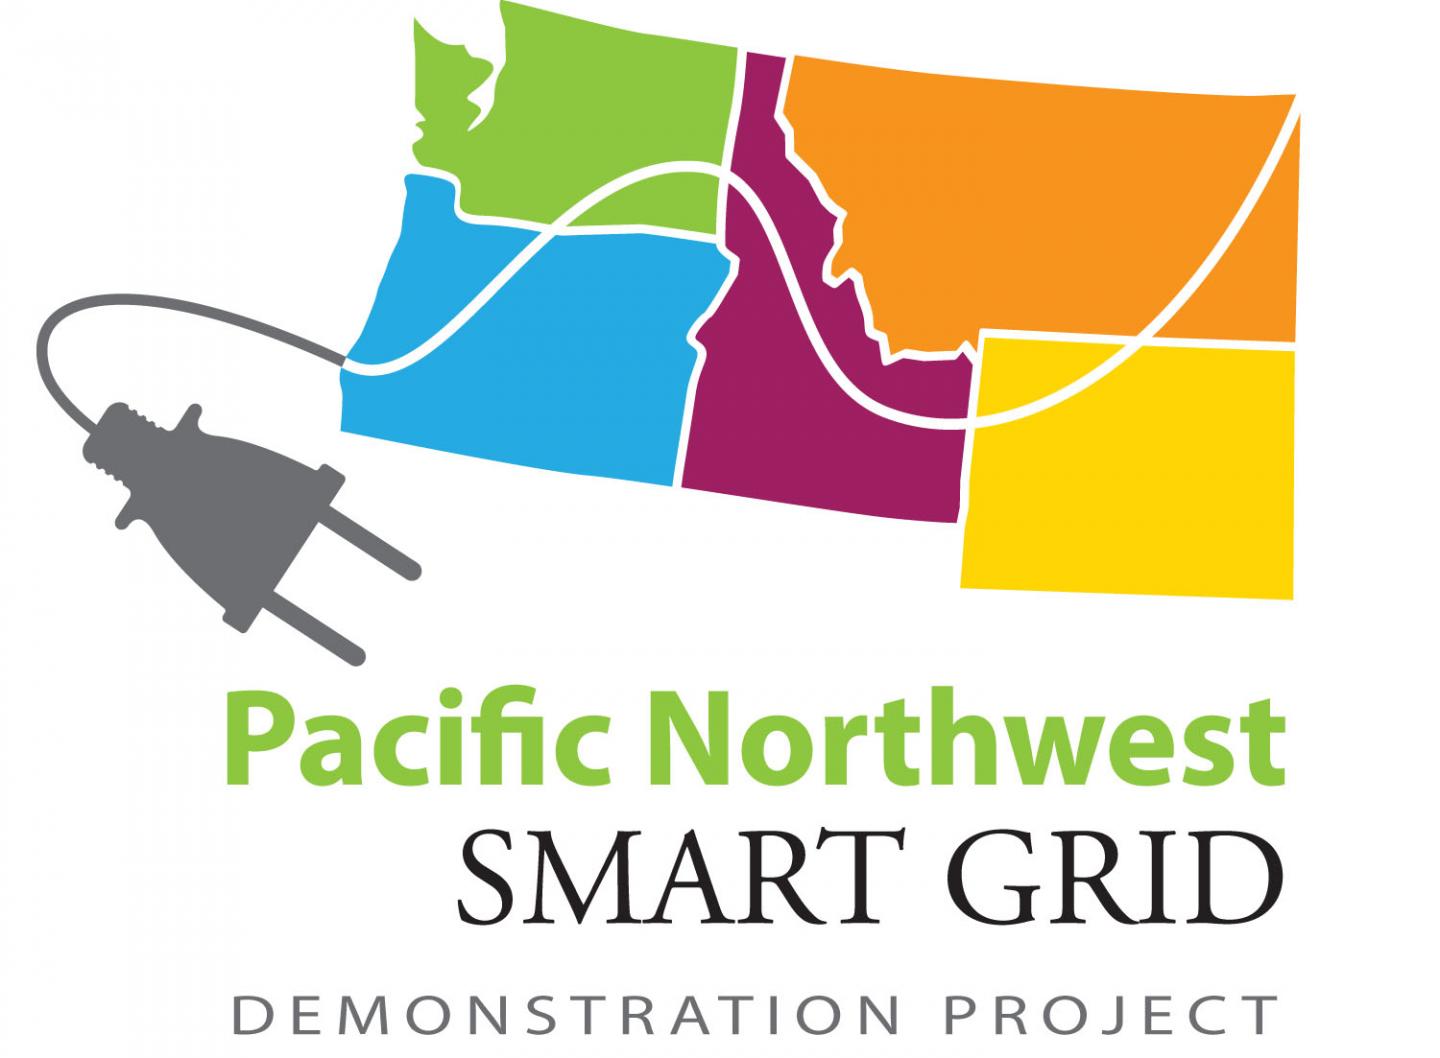 Pacific Northwest Smart Grid Demonstration Project logo